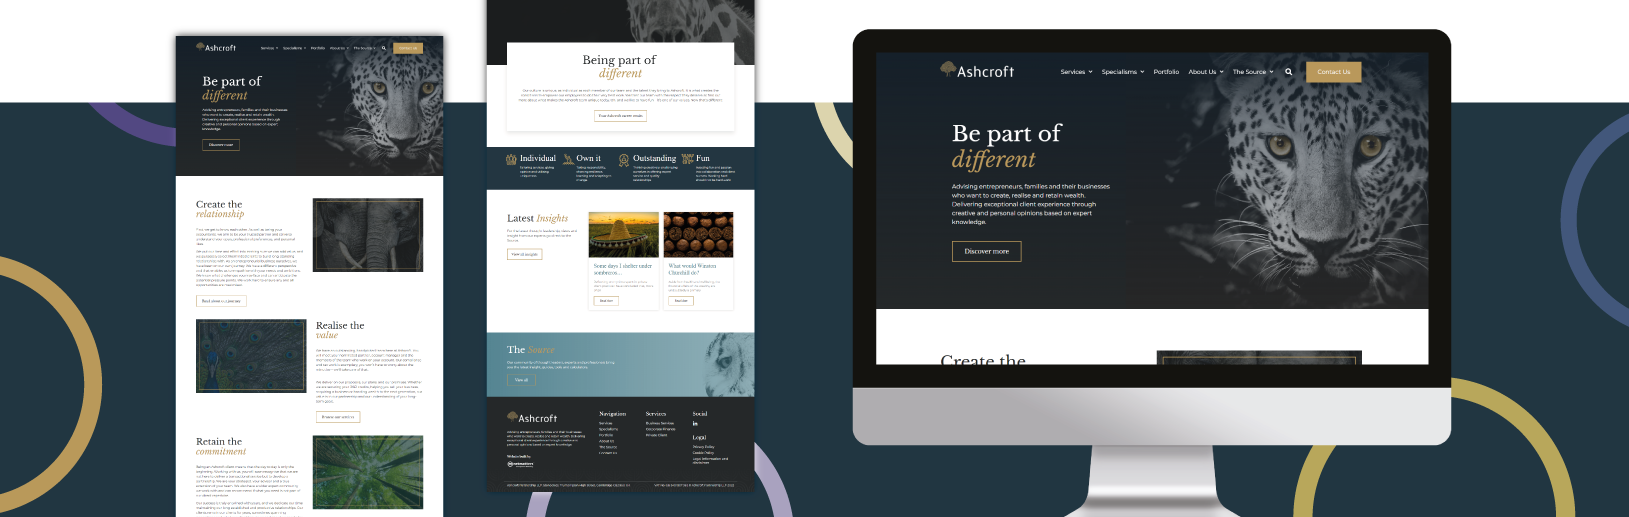 Ashcroft Partnership Website Build, Design & Development